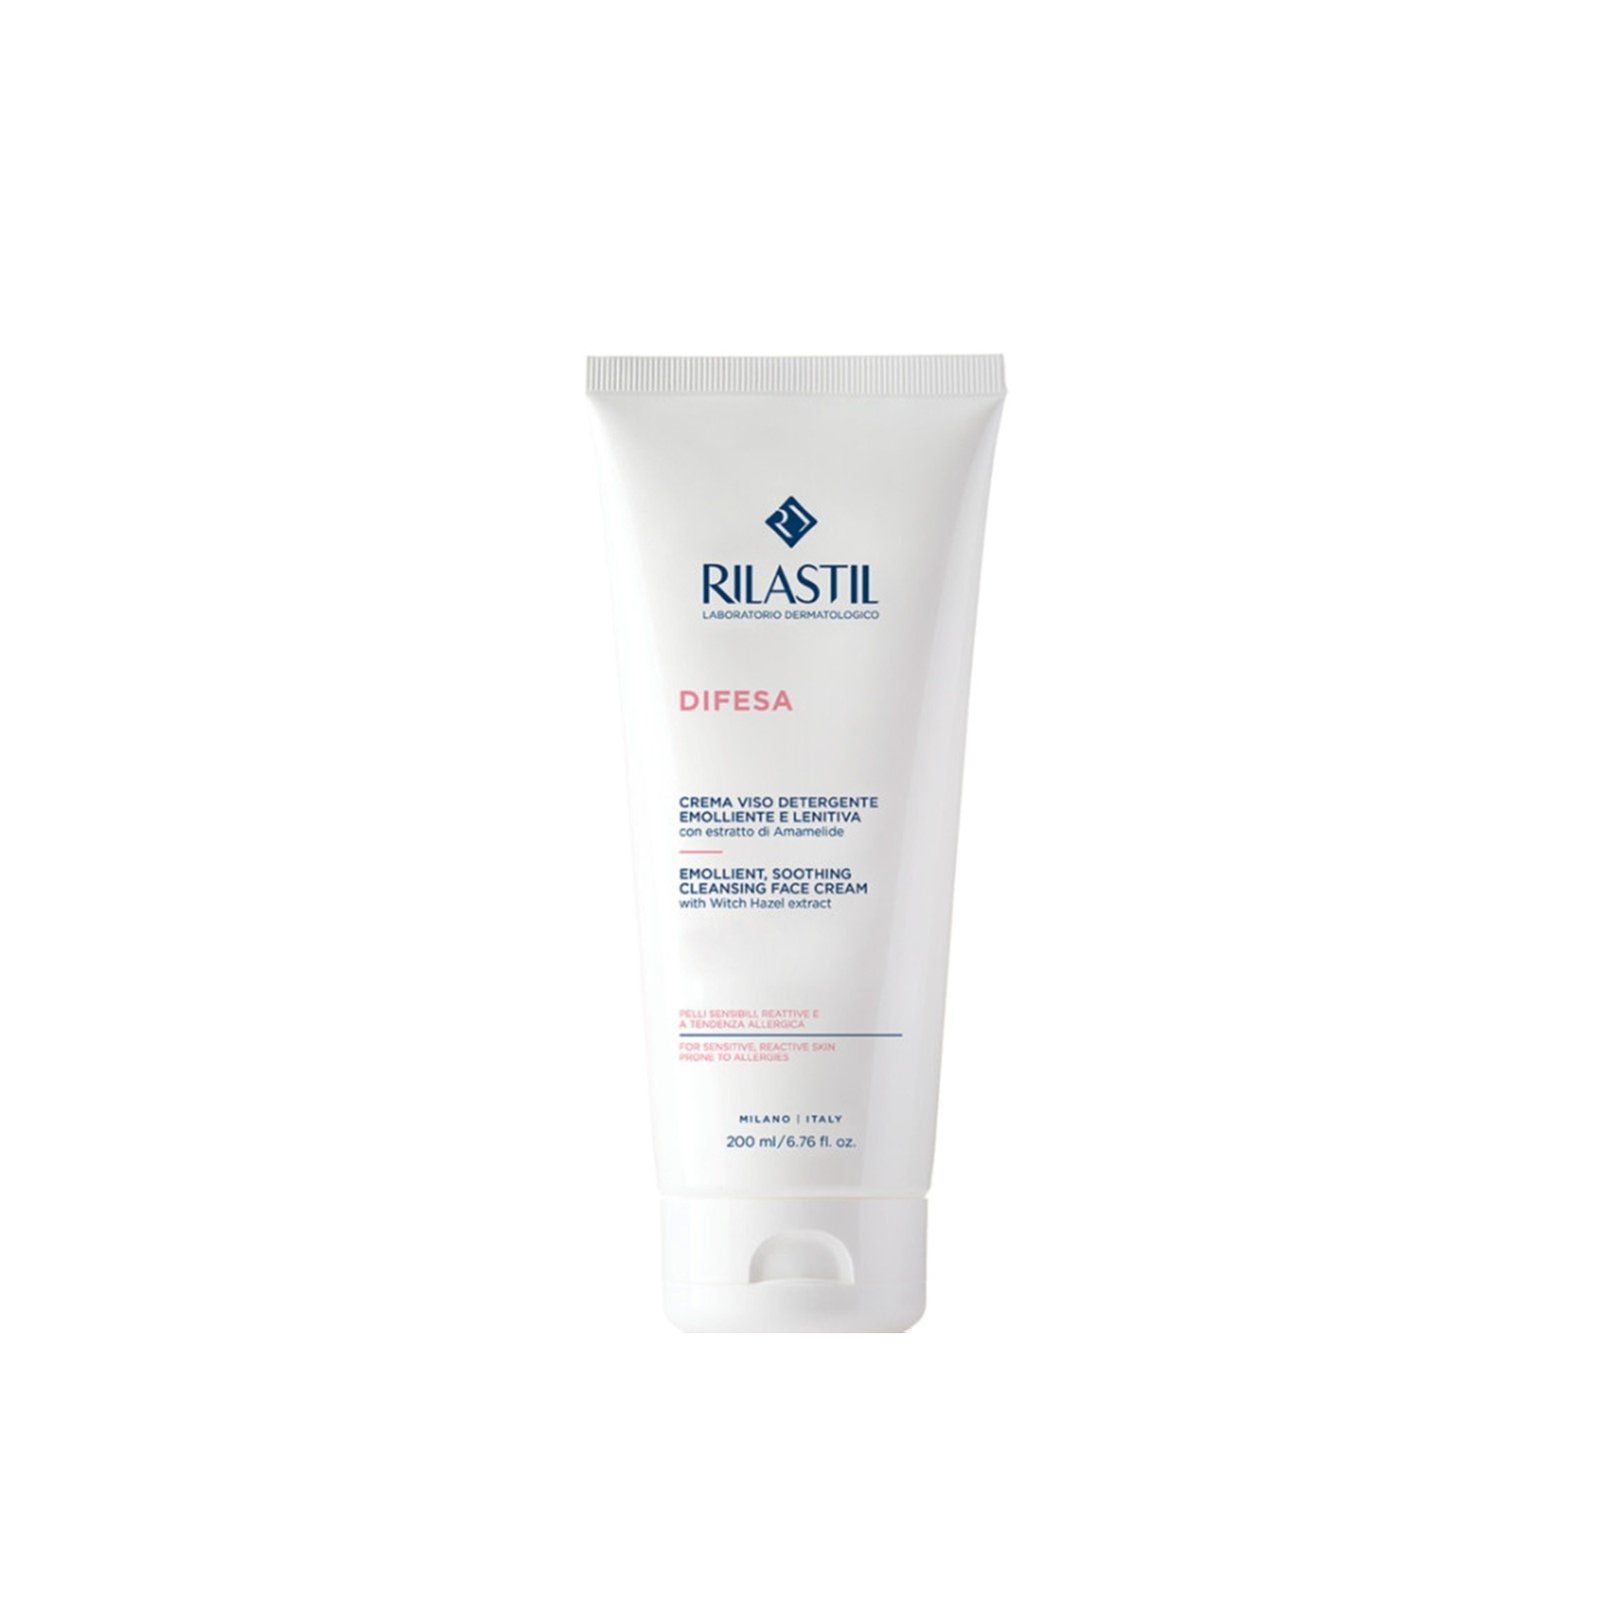 Rilastil Difesa Cleansing Face Cream 200ml (6.76 fl oz)